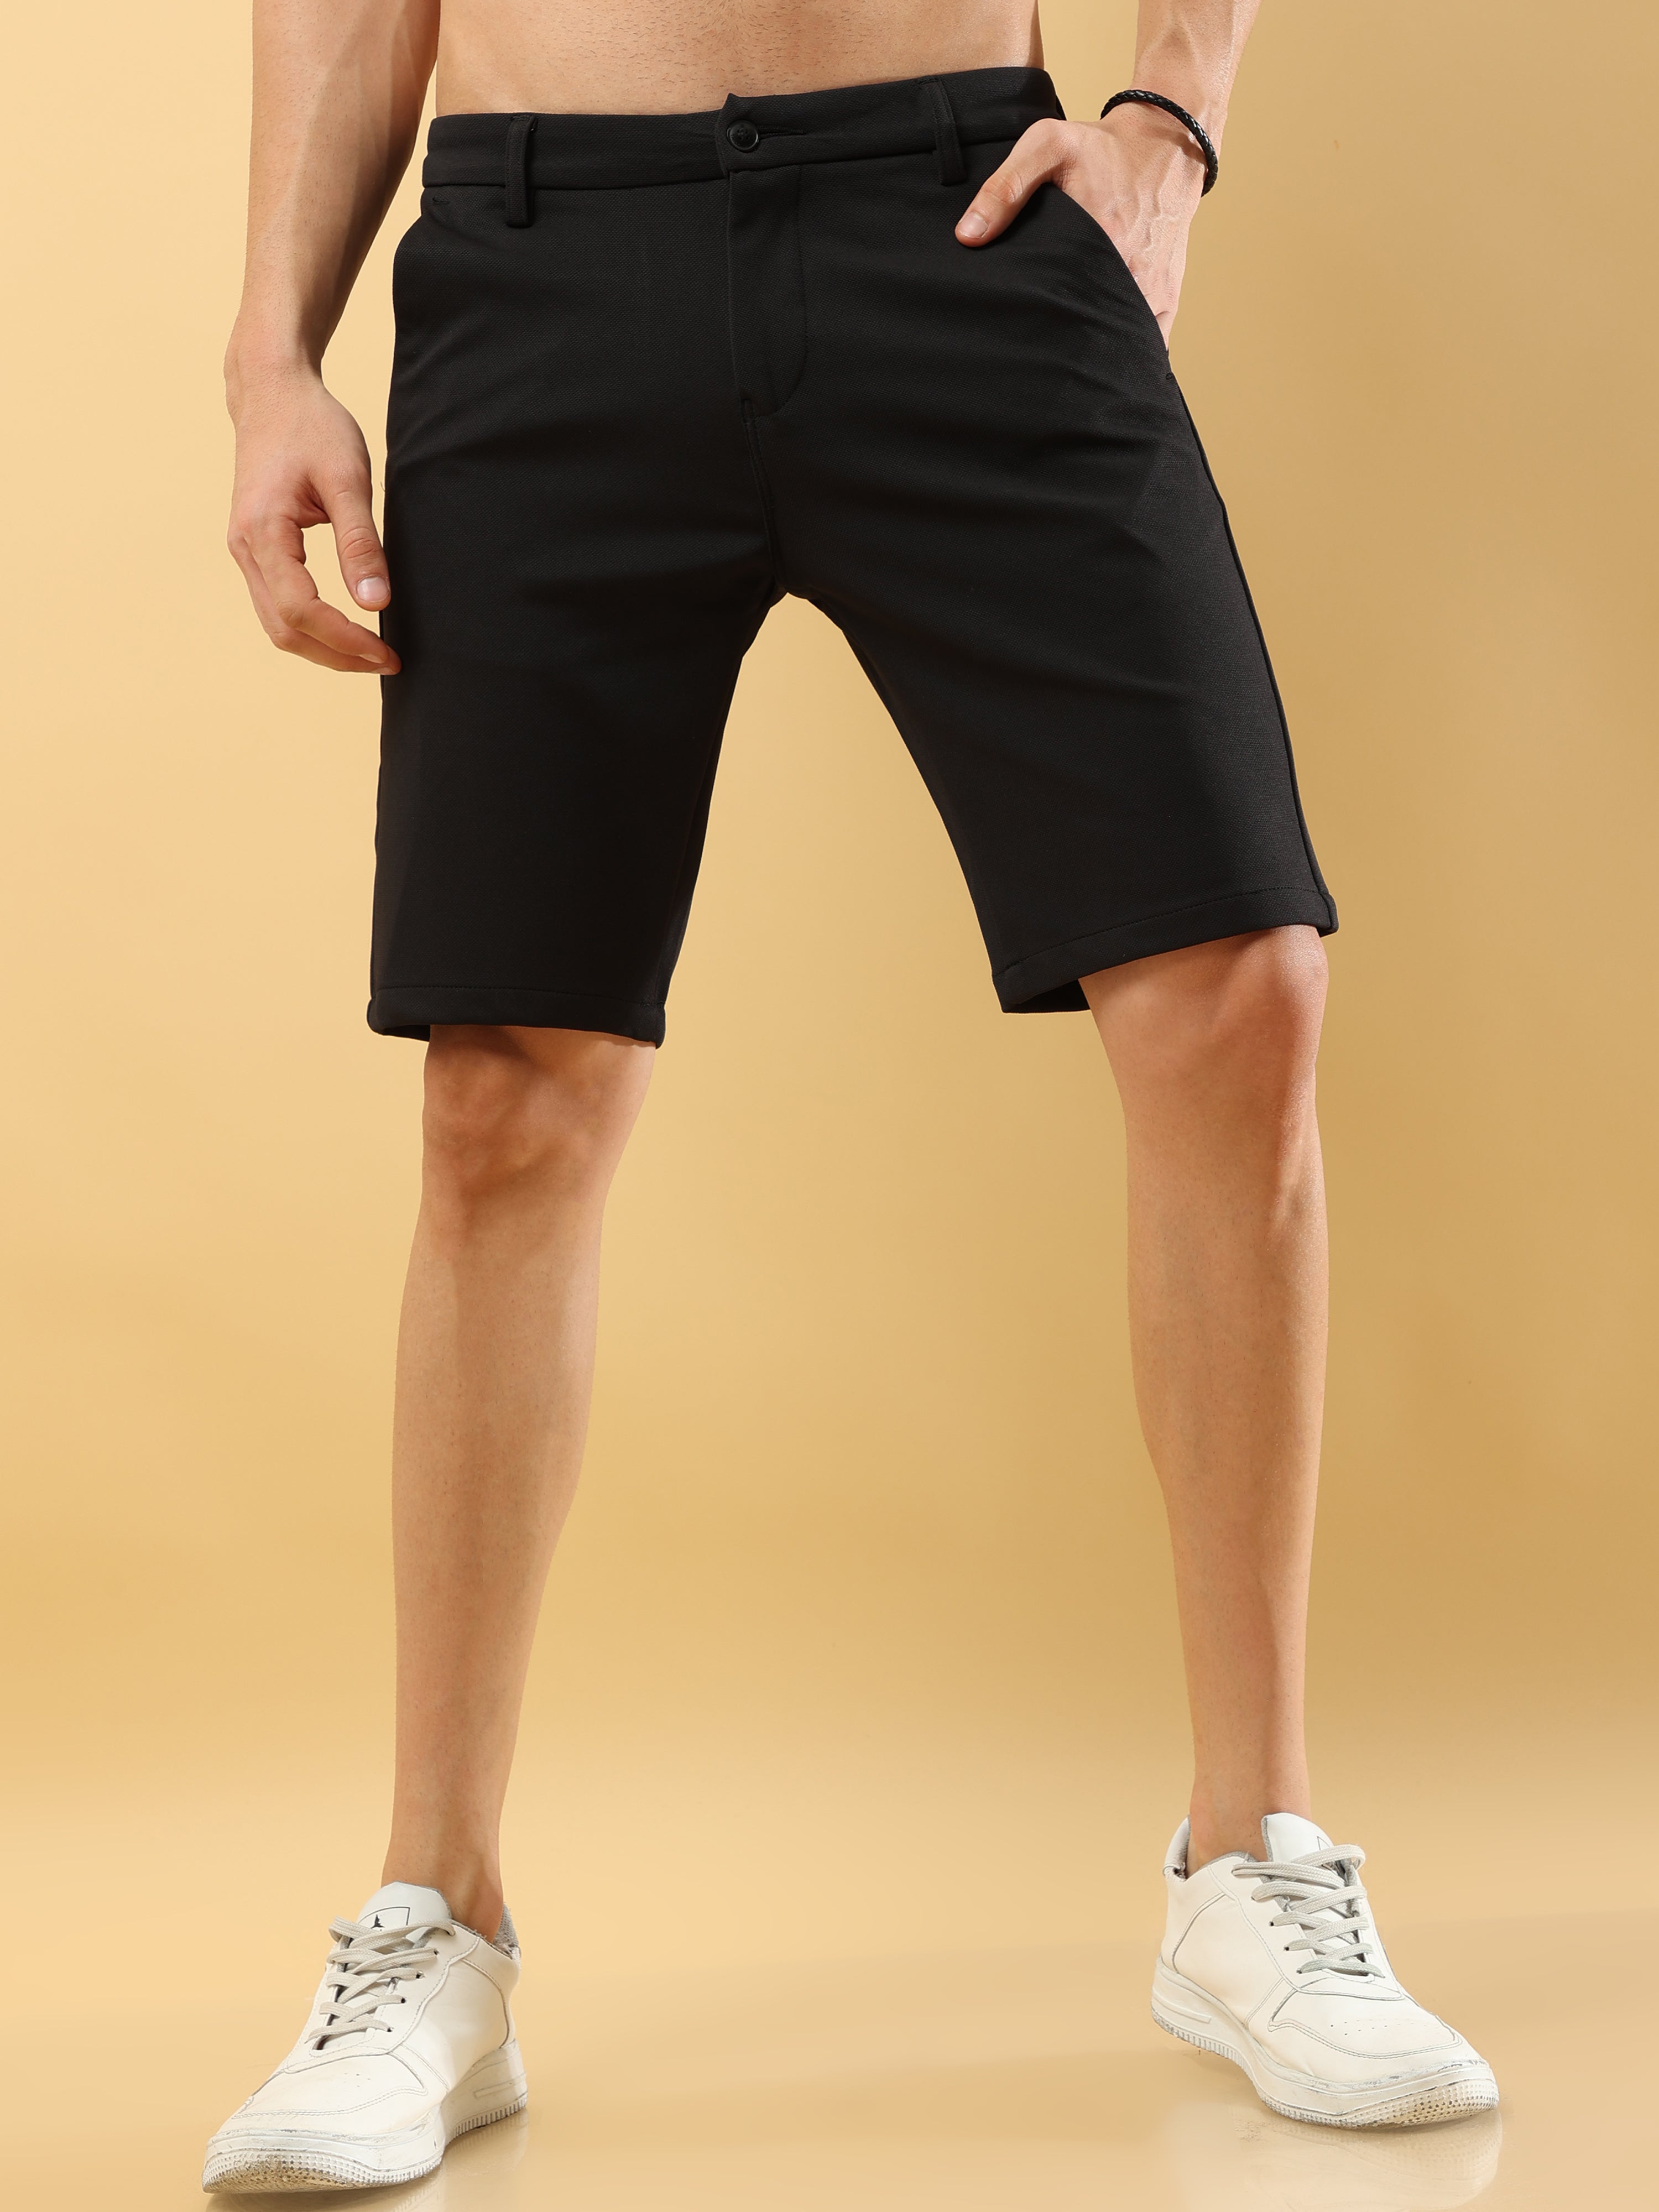 Power Stretch Black Shorts